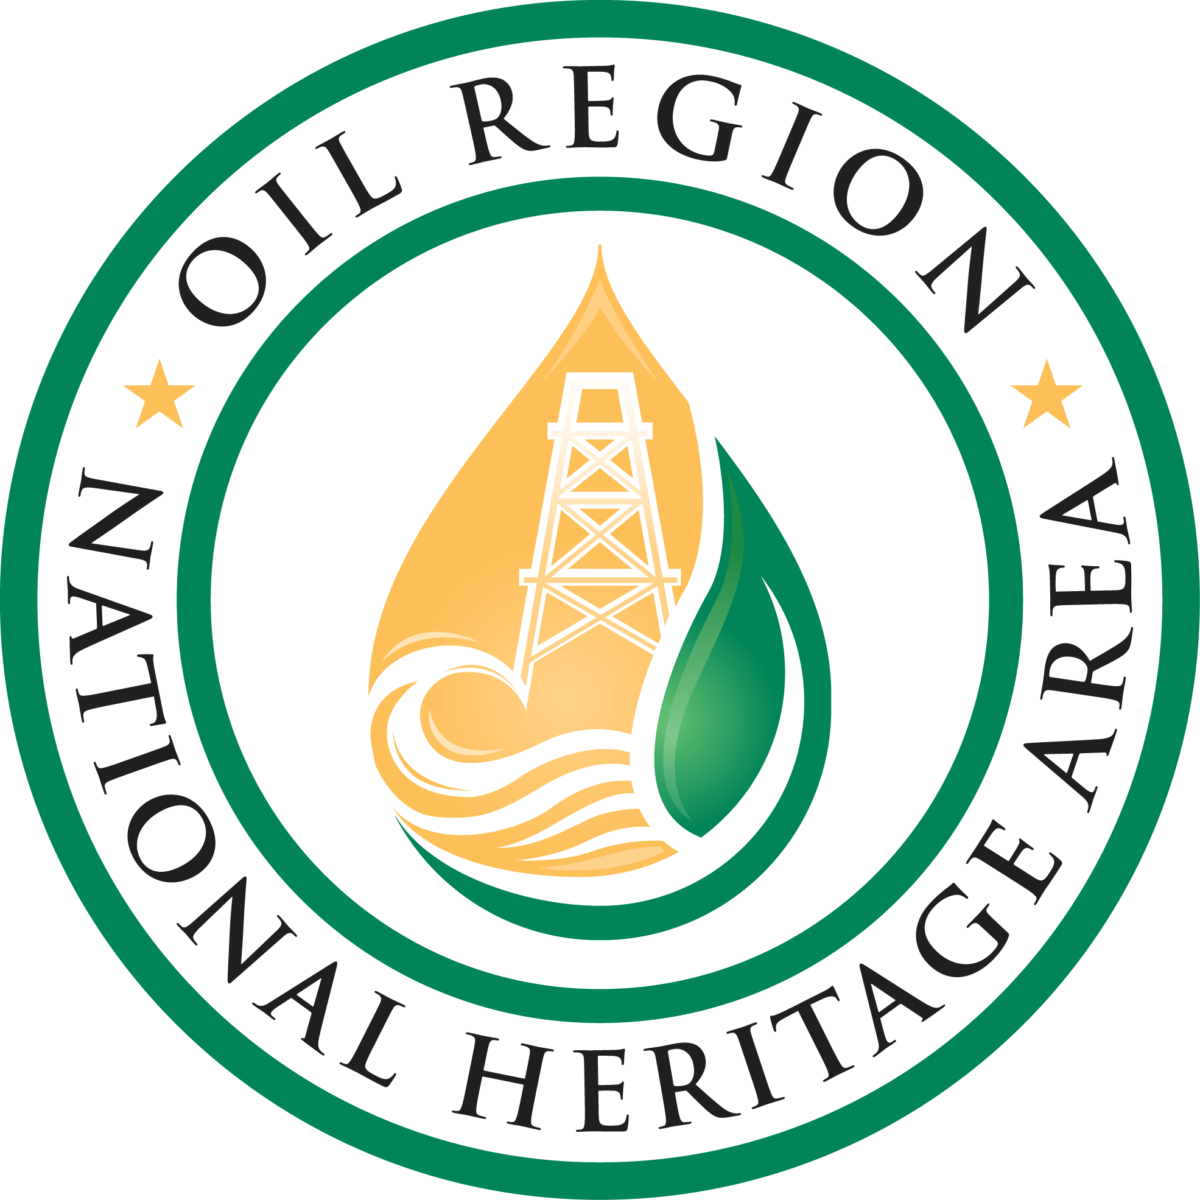 Venango County Oil Region